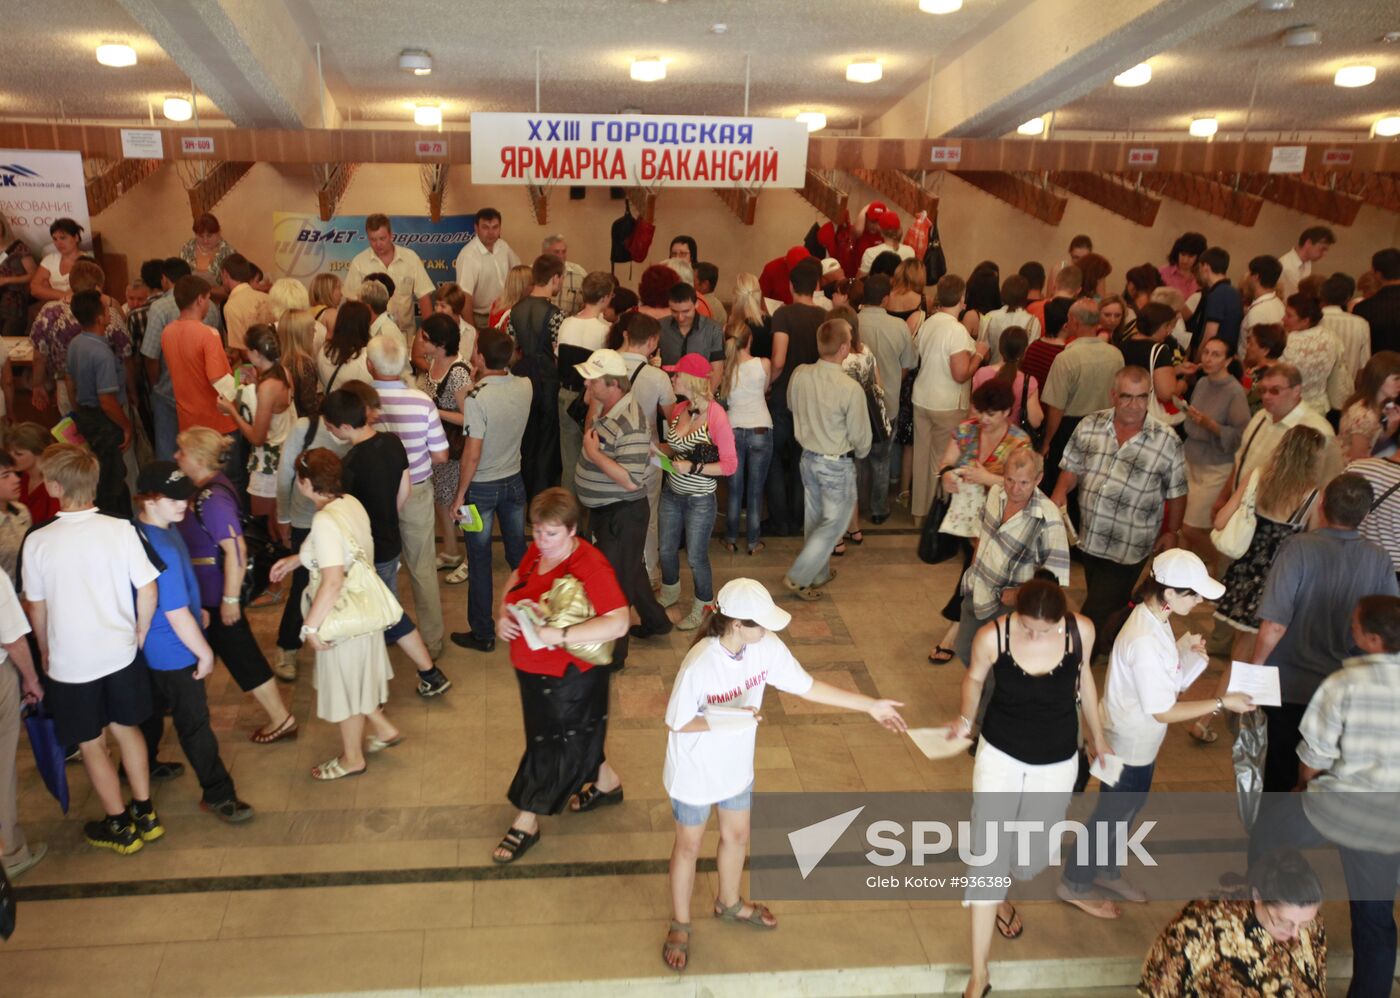 23rd job fair in Stavropol